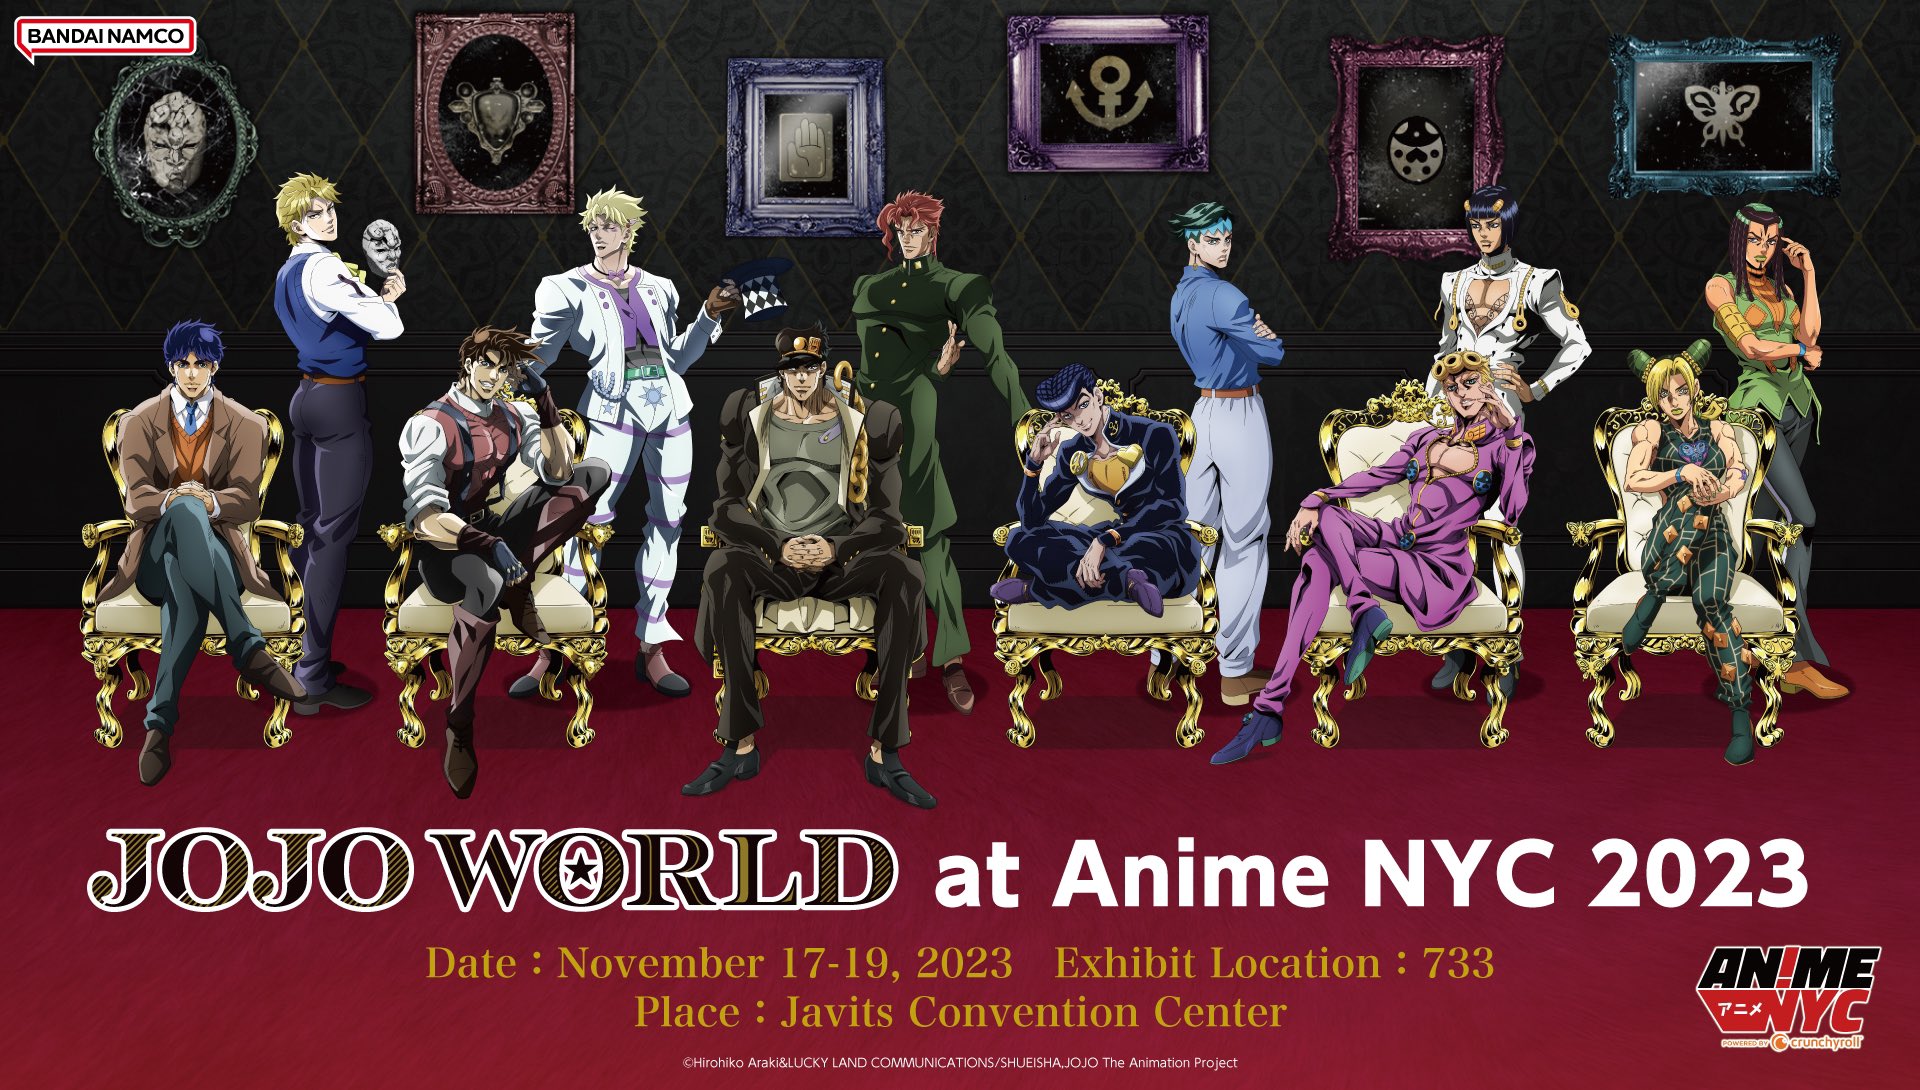 JOJO WORLD Makes Its US Debut at Anime NYC 2023